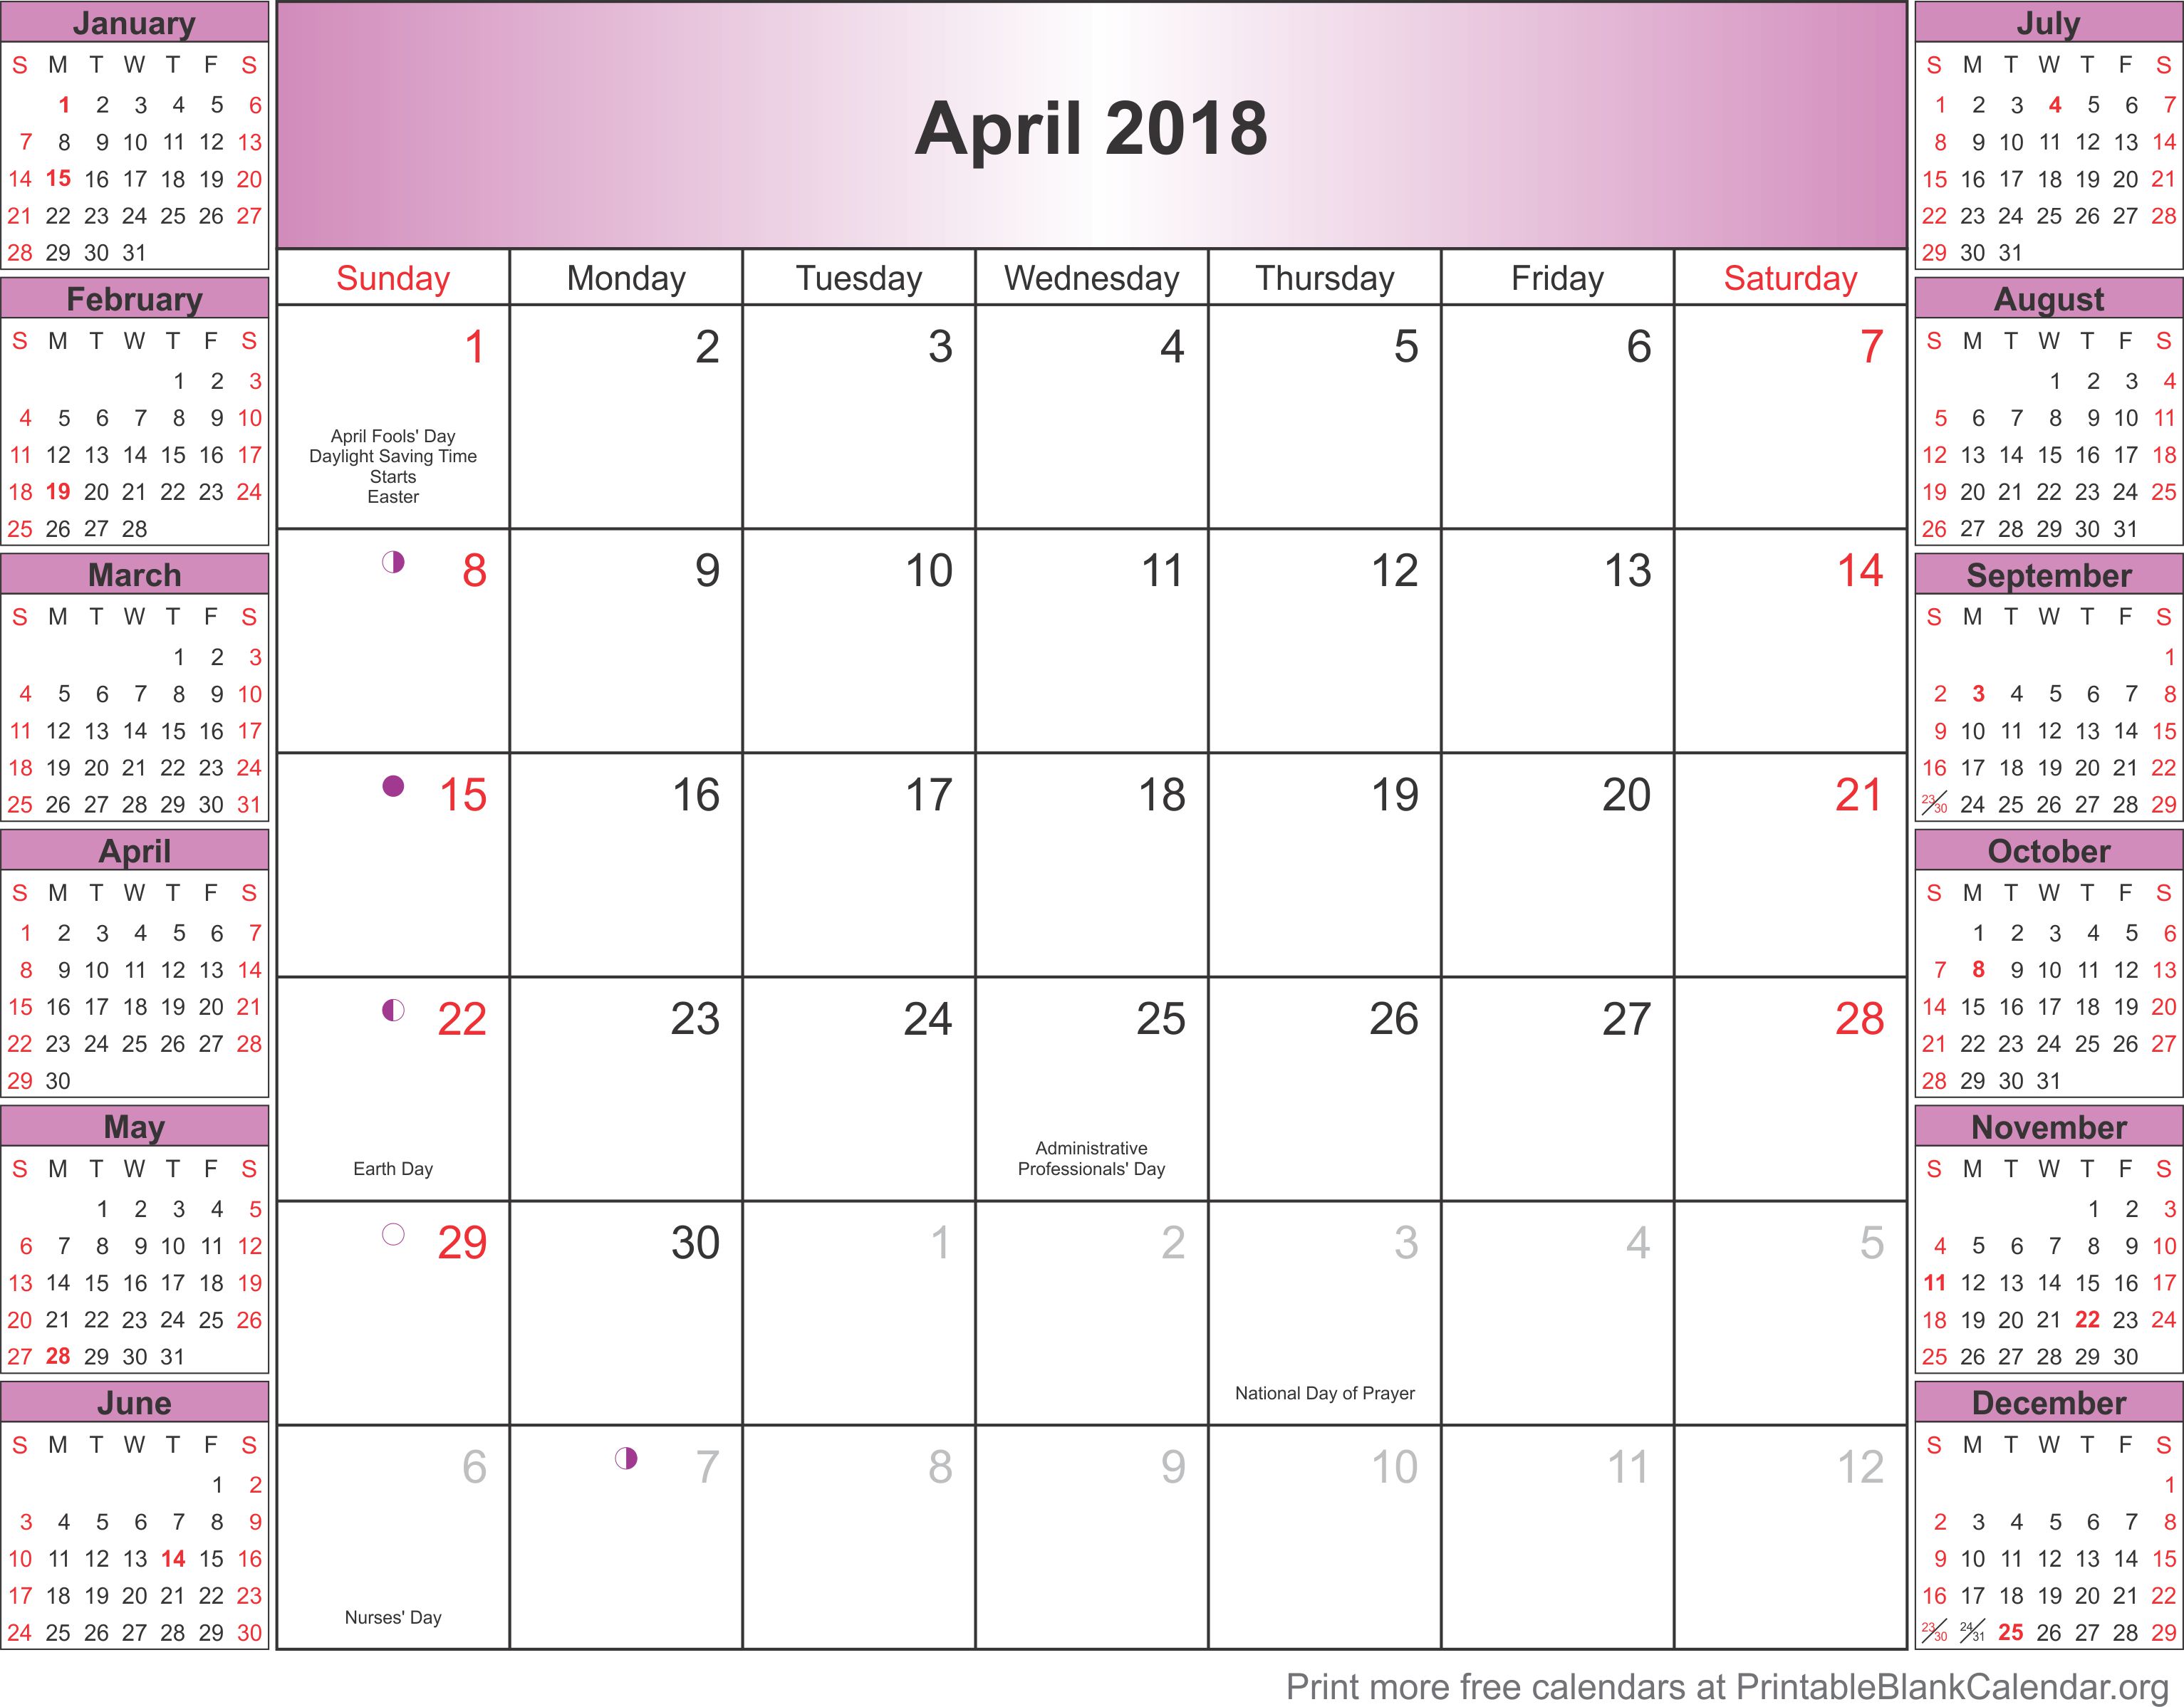 April 2018 calendar with holidays Printable Blank Calendar org